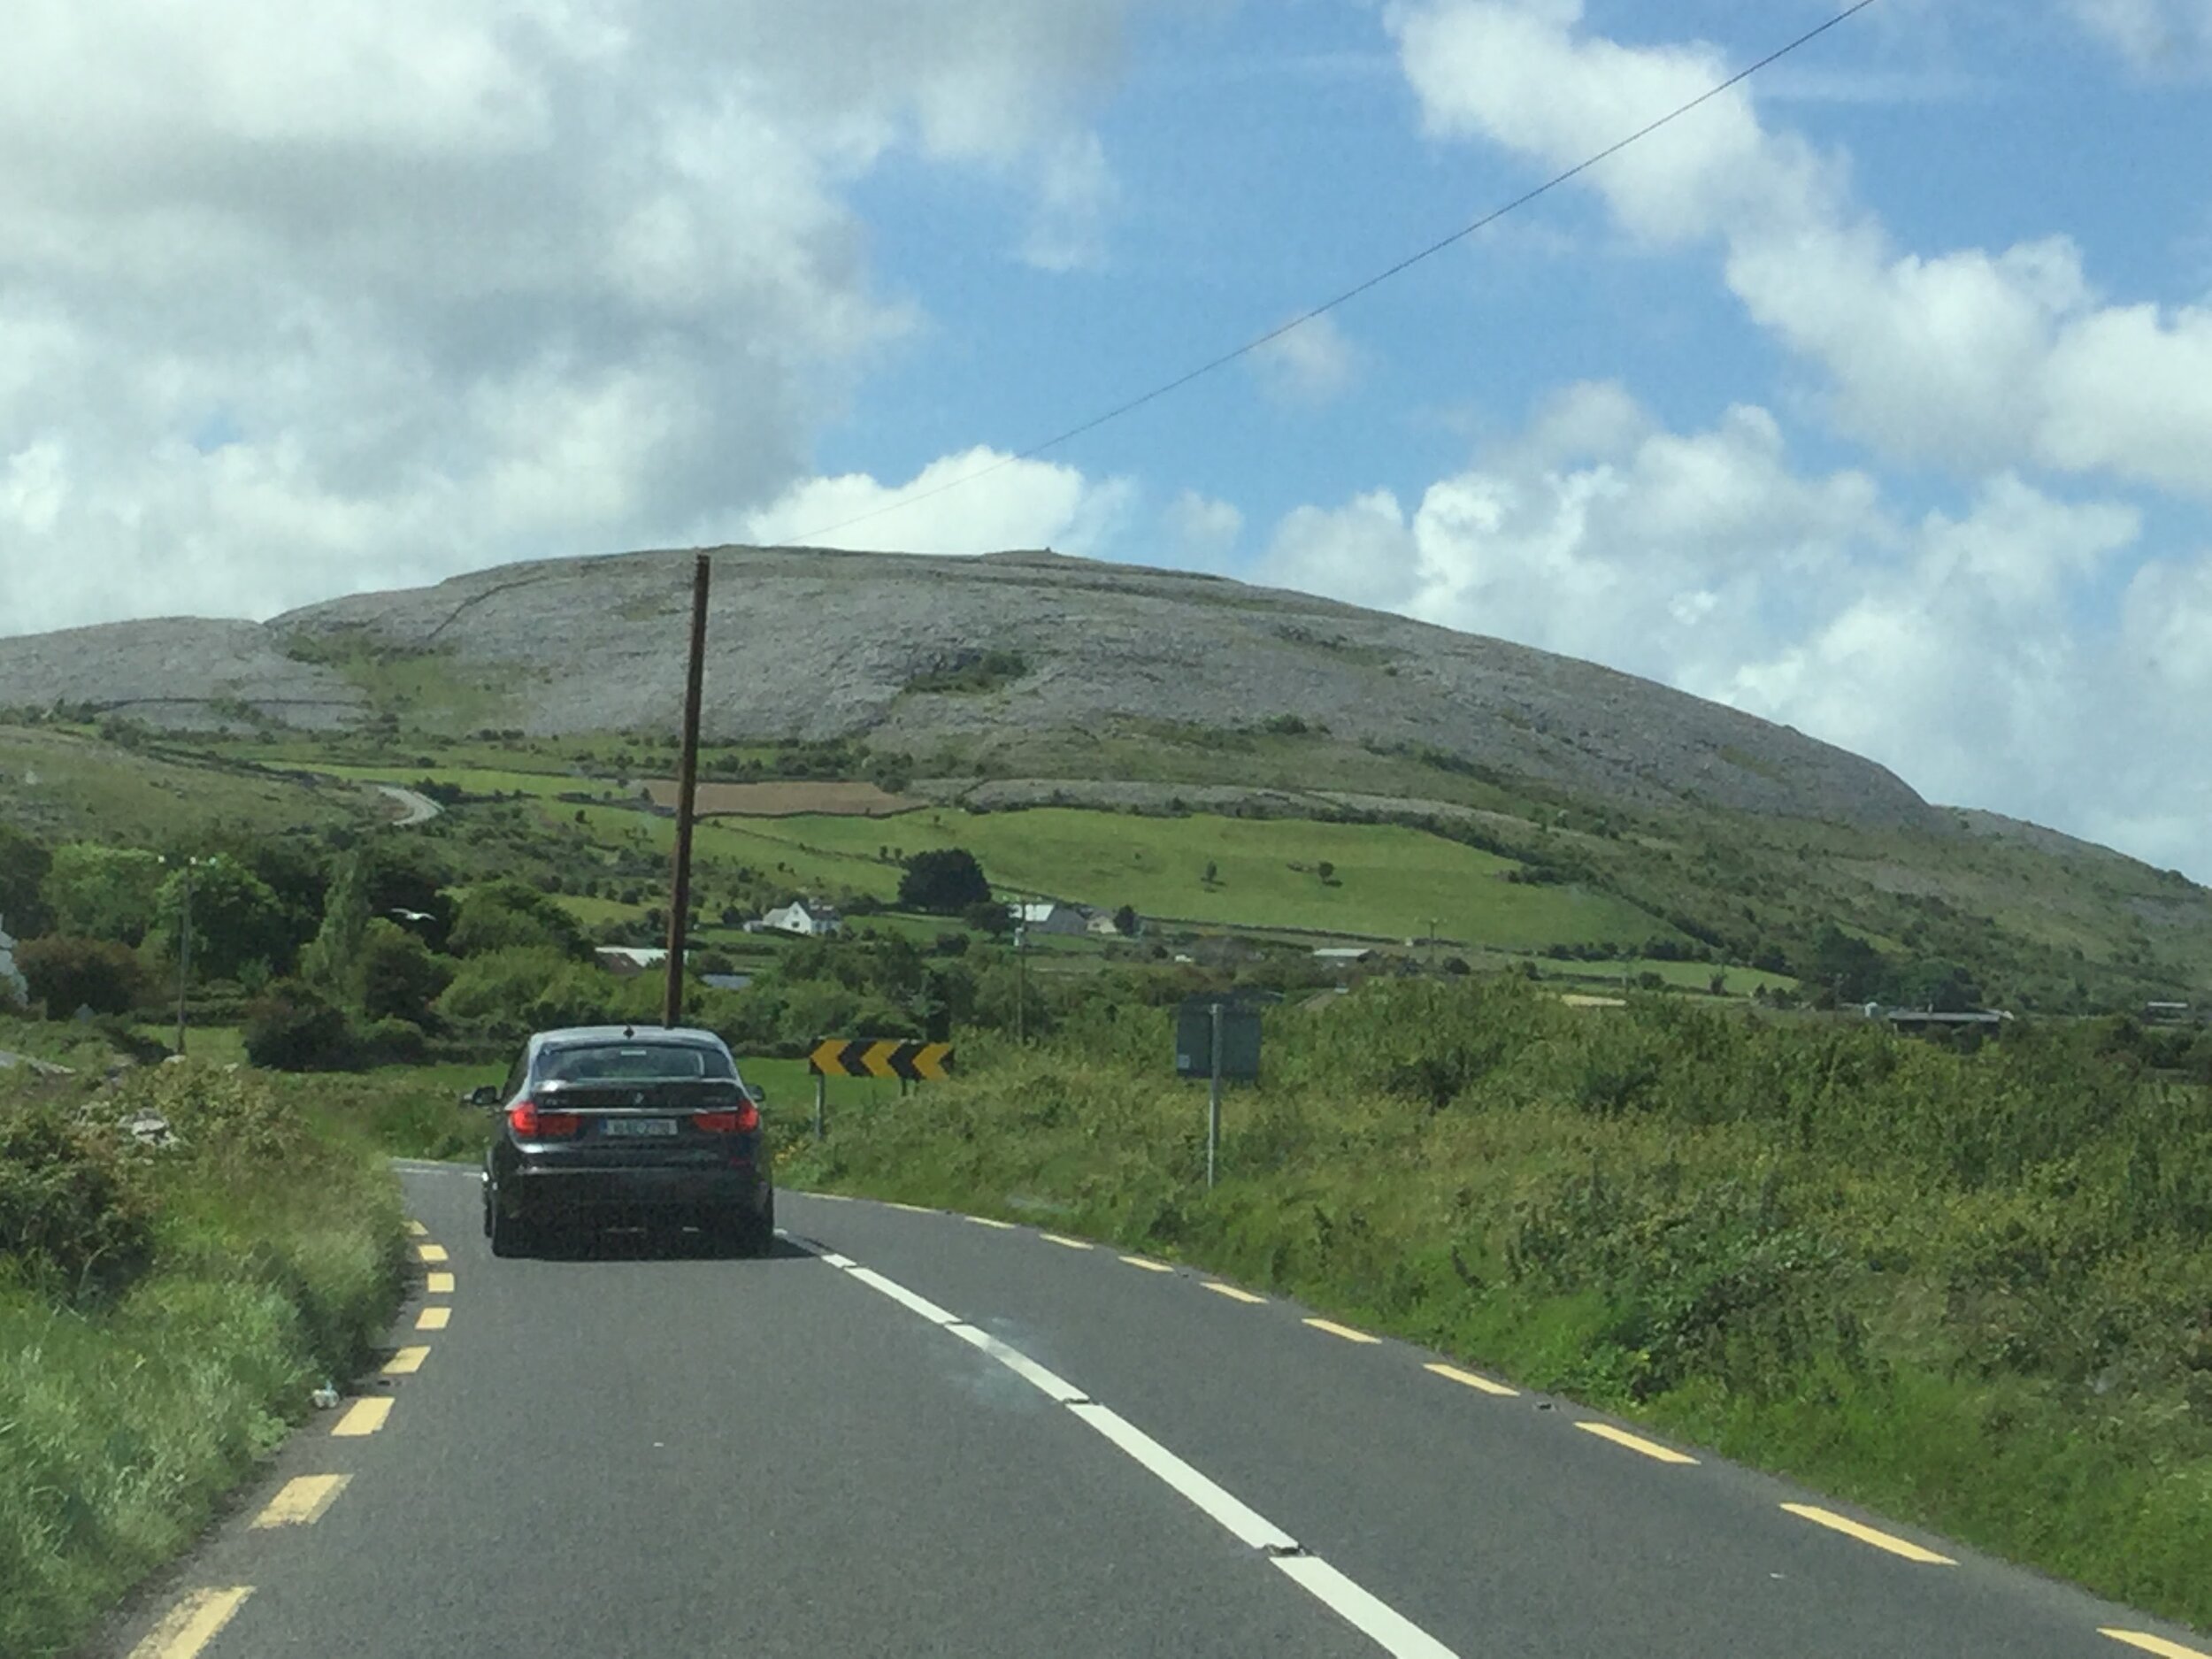 Hilly, winding Irish roads